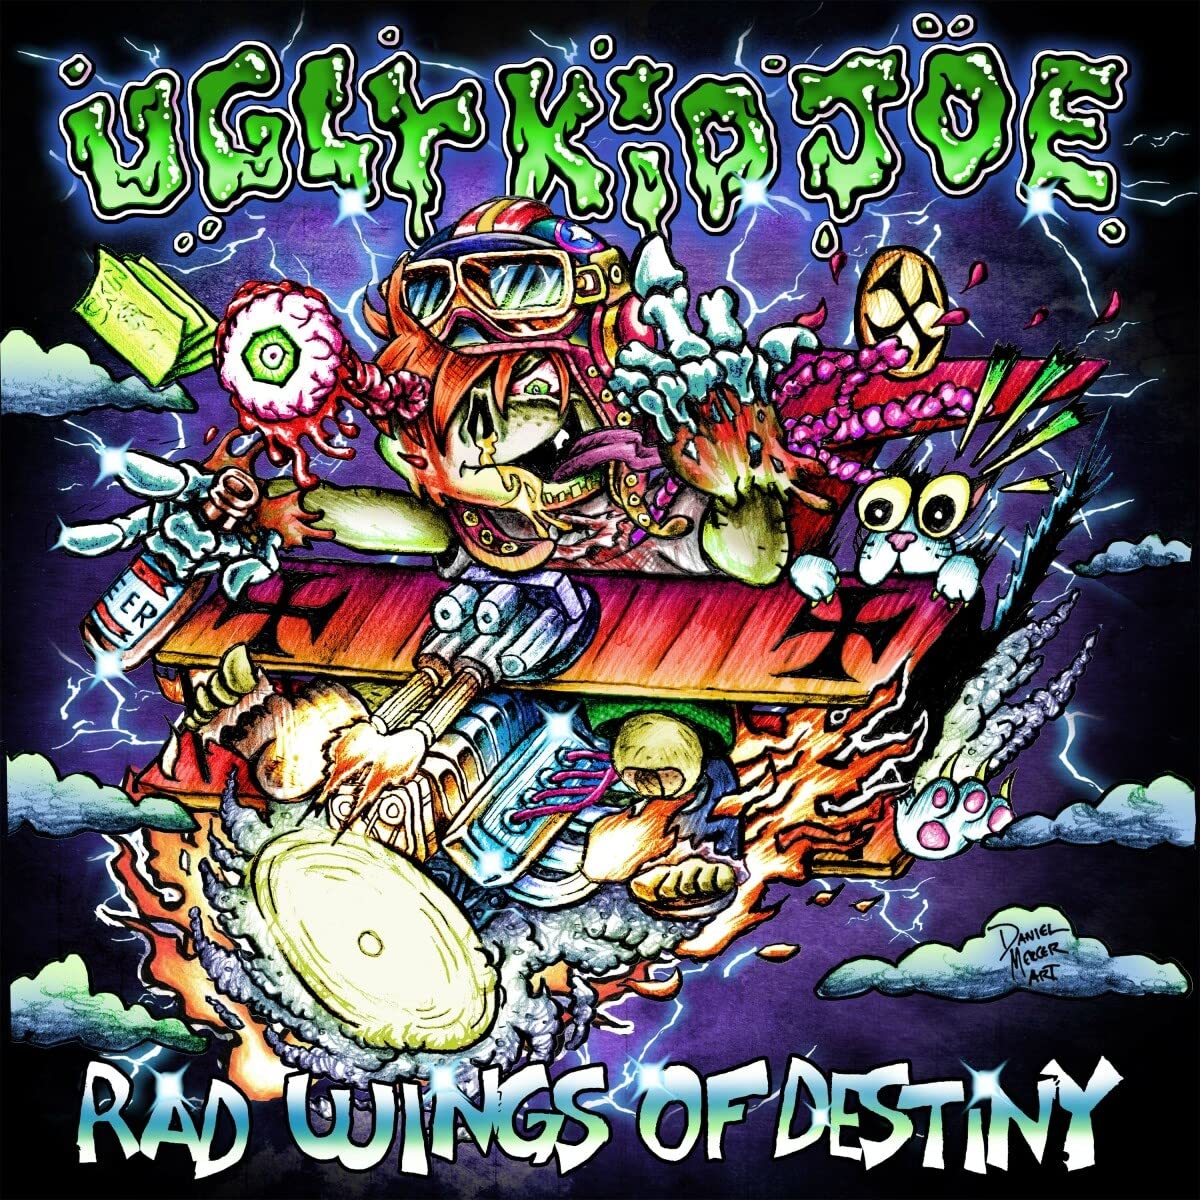 Ugy Kid Joe – Rad wings of destiny (hard rock)